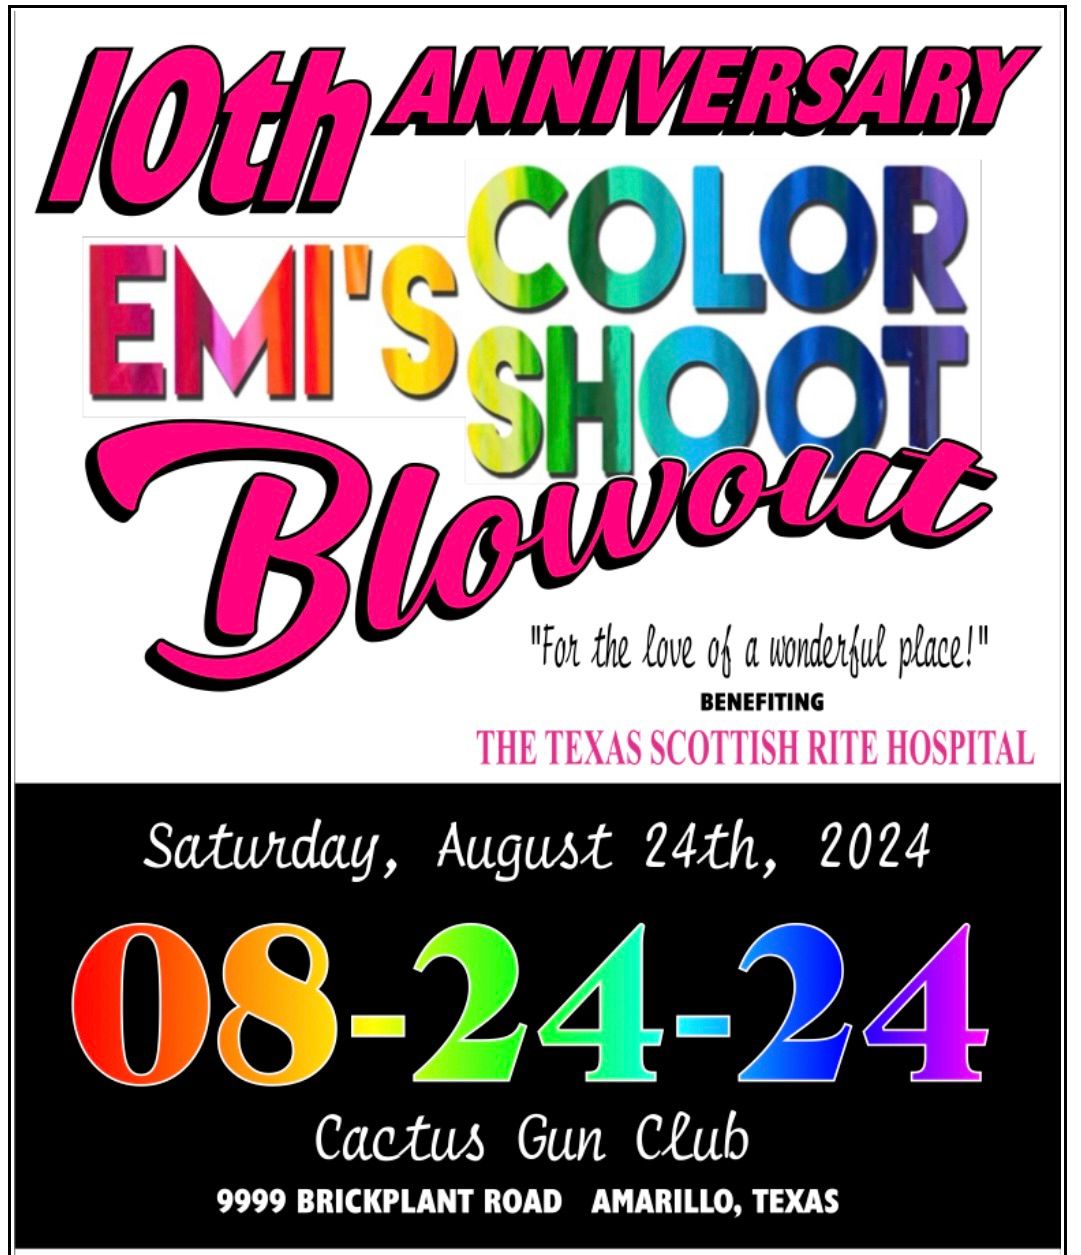 10th Anniversary Emi\u2019s Color Shoot